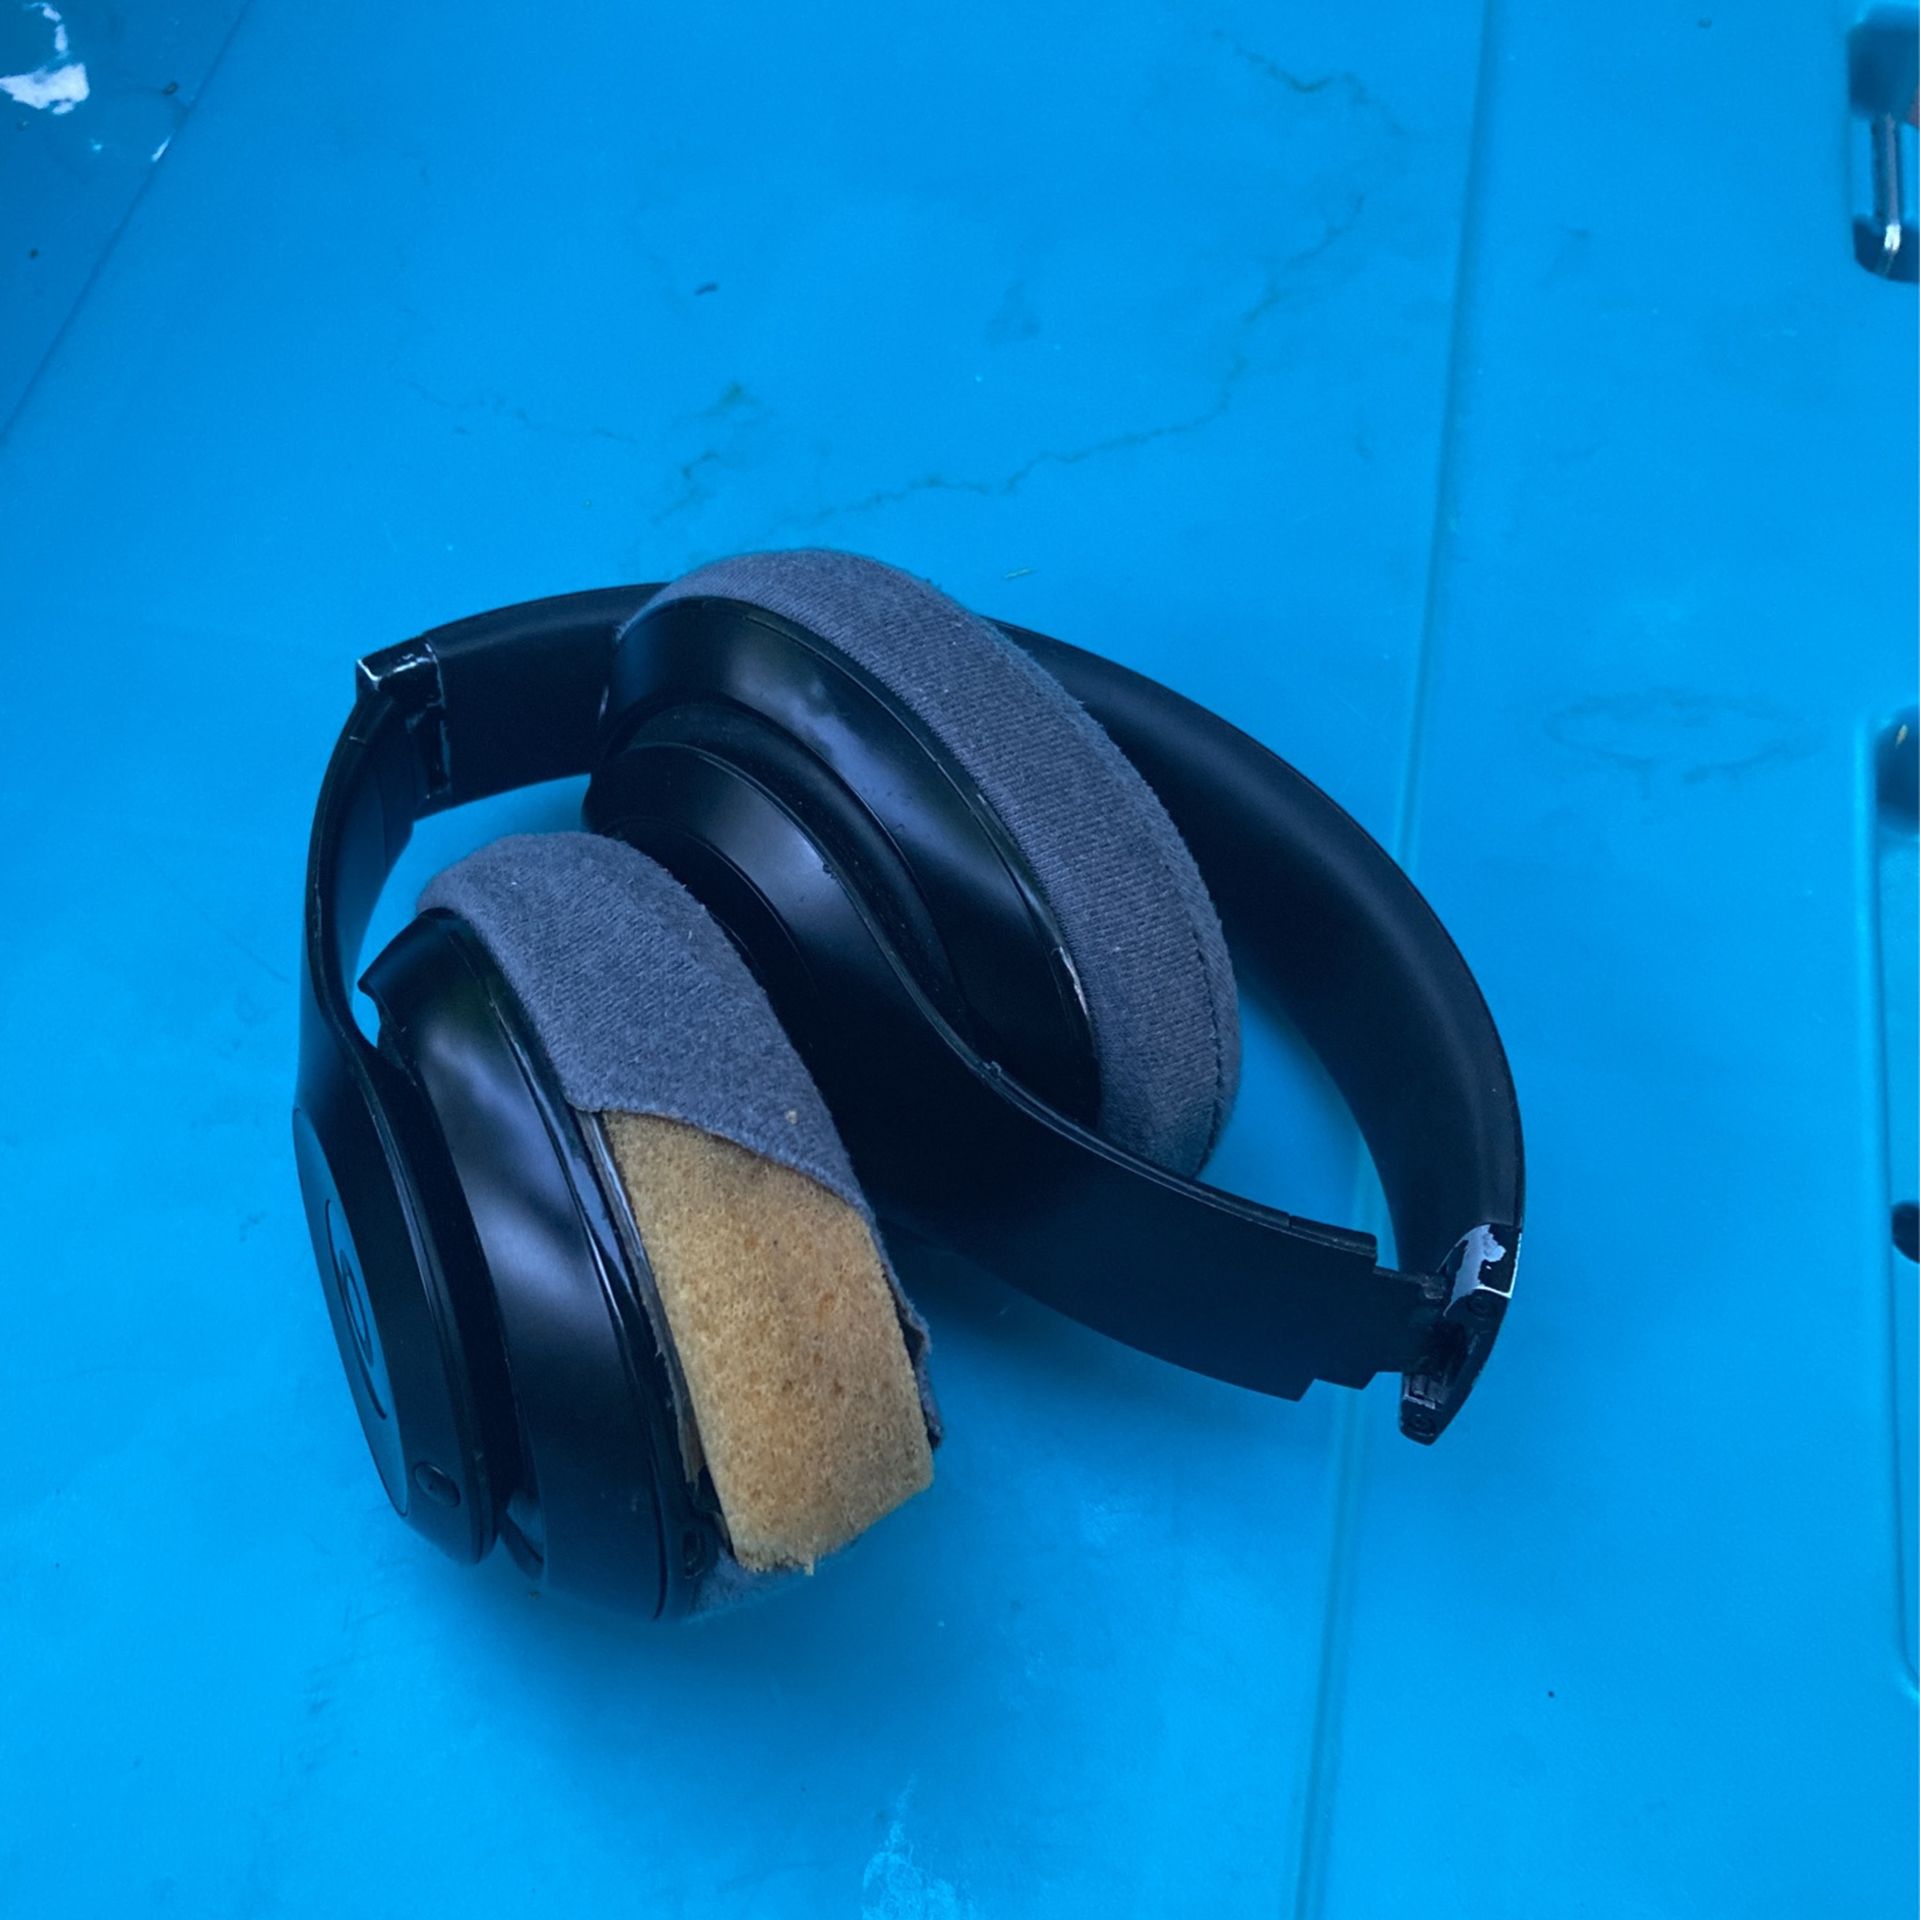 Beats Studio Headphone